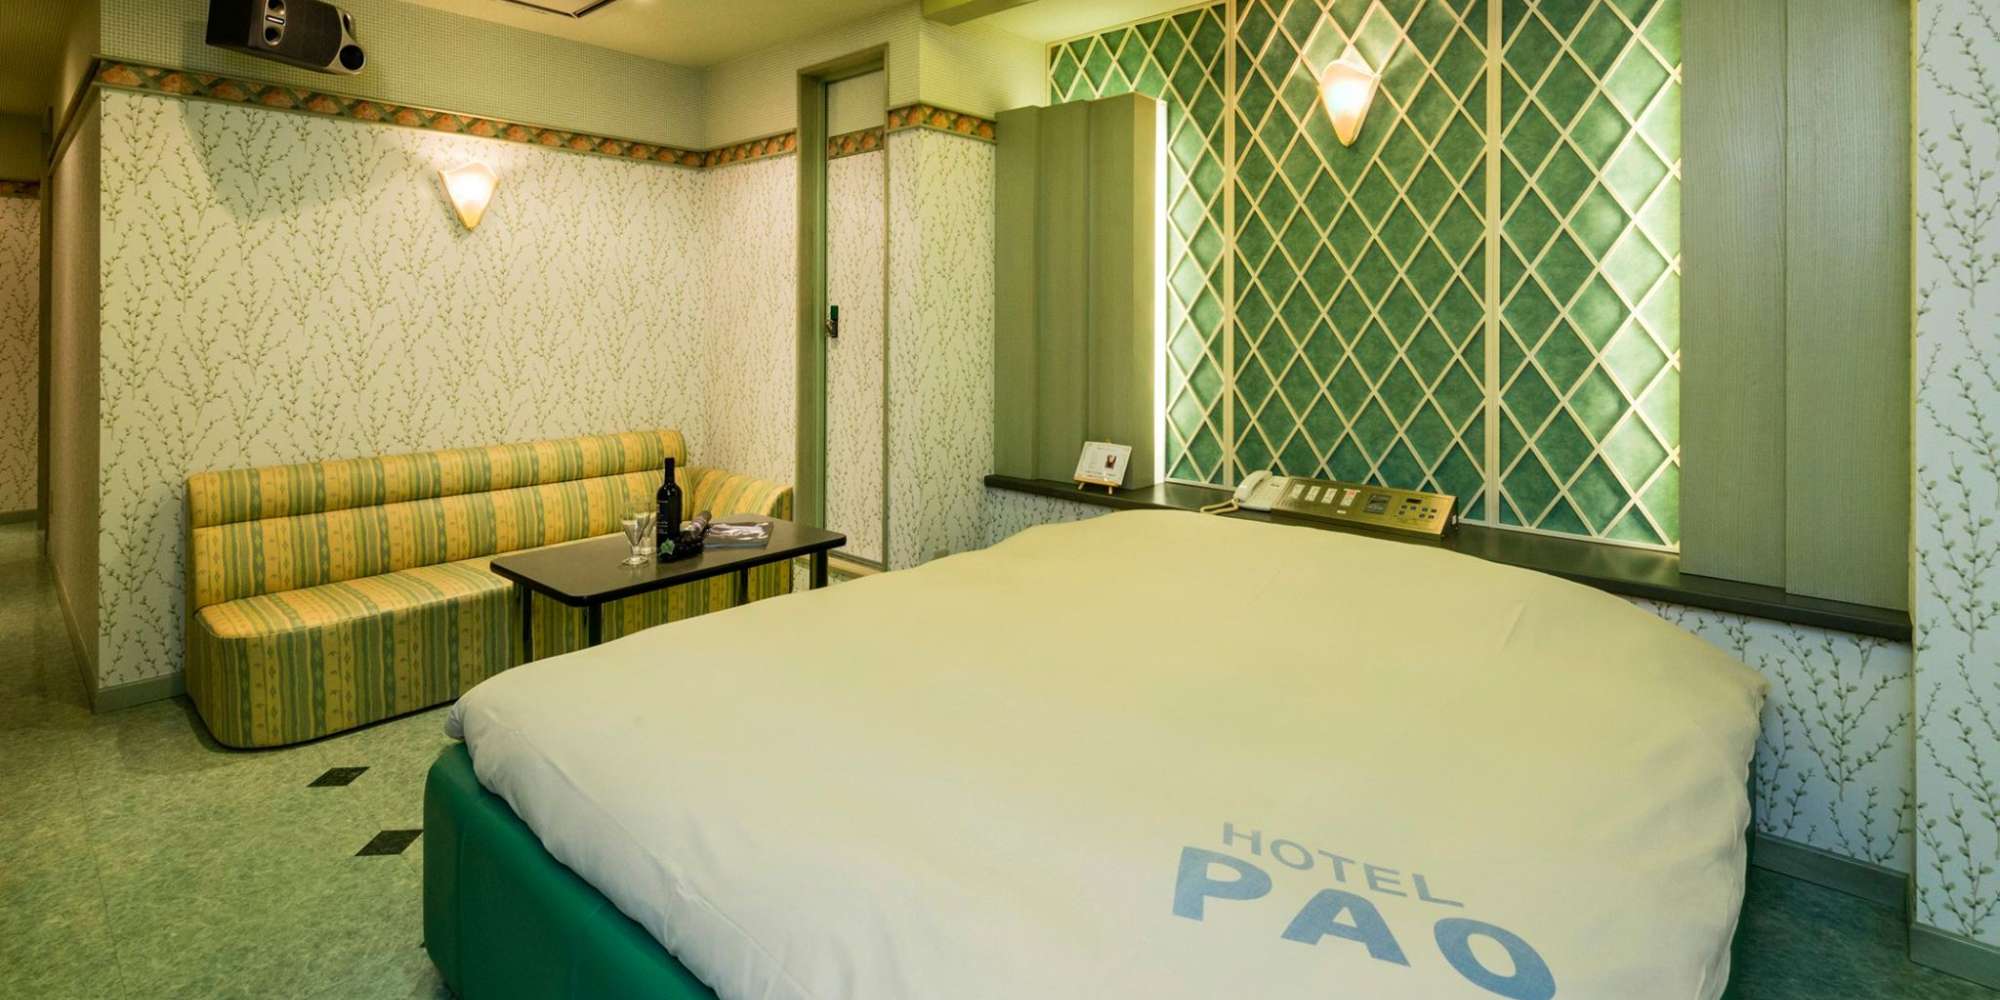 Hotel Pao（ホテルパオ）　一般　客室　202号室